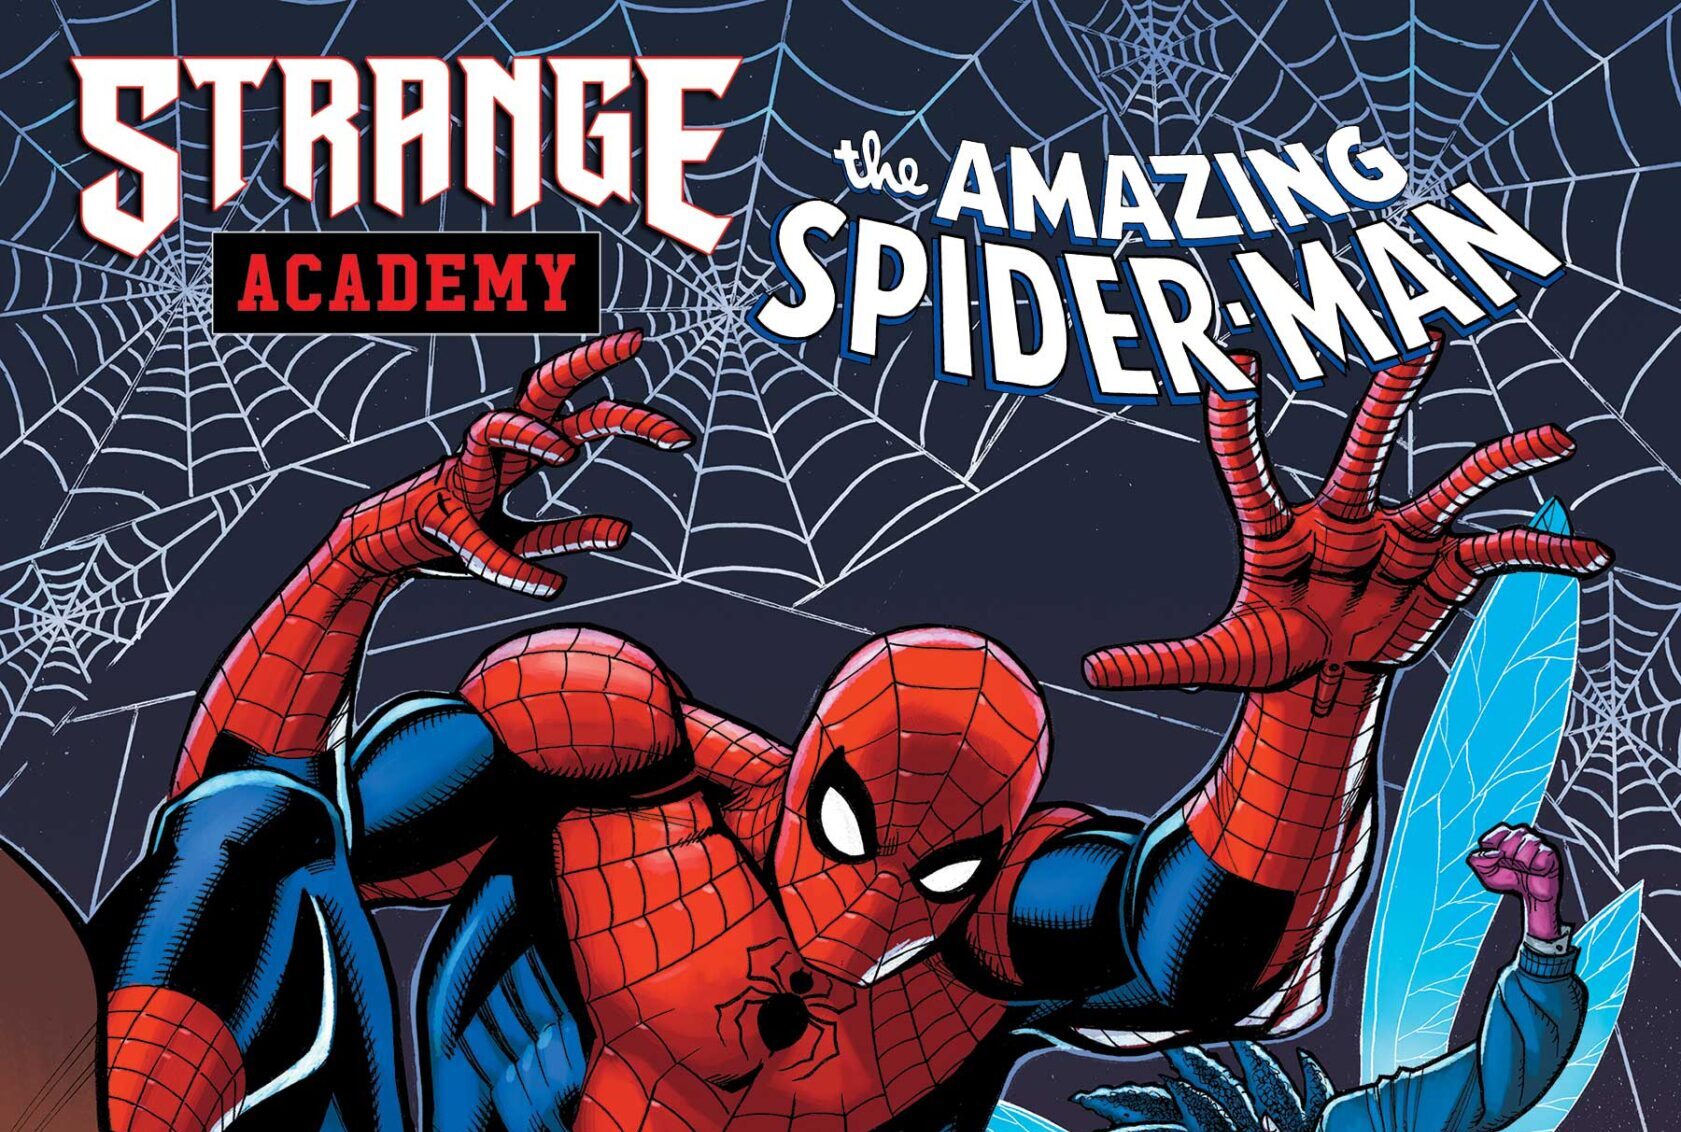 Strange Academy Returns with an Epic Three-Part Saga in Marvel Universe